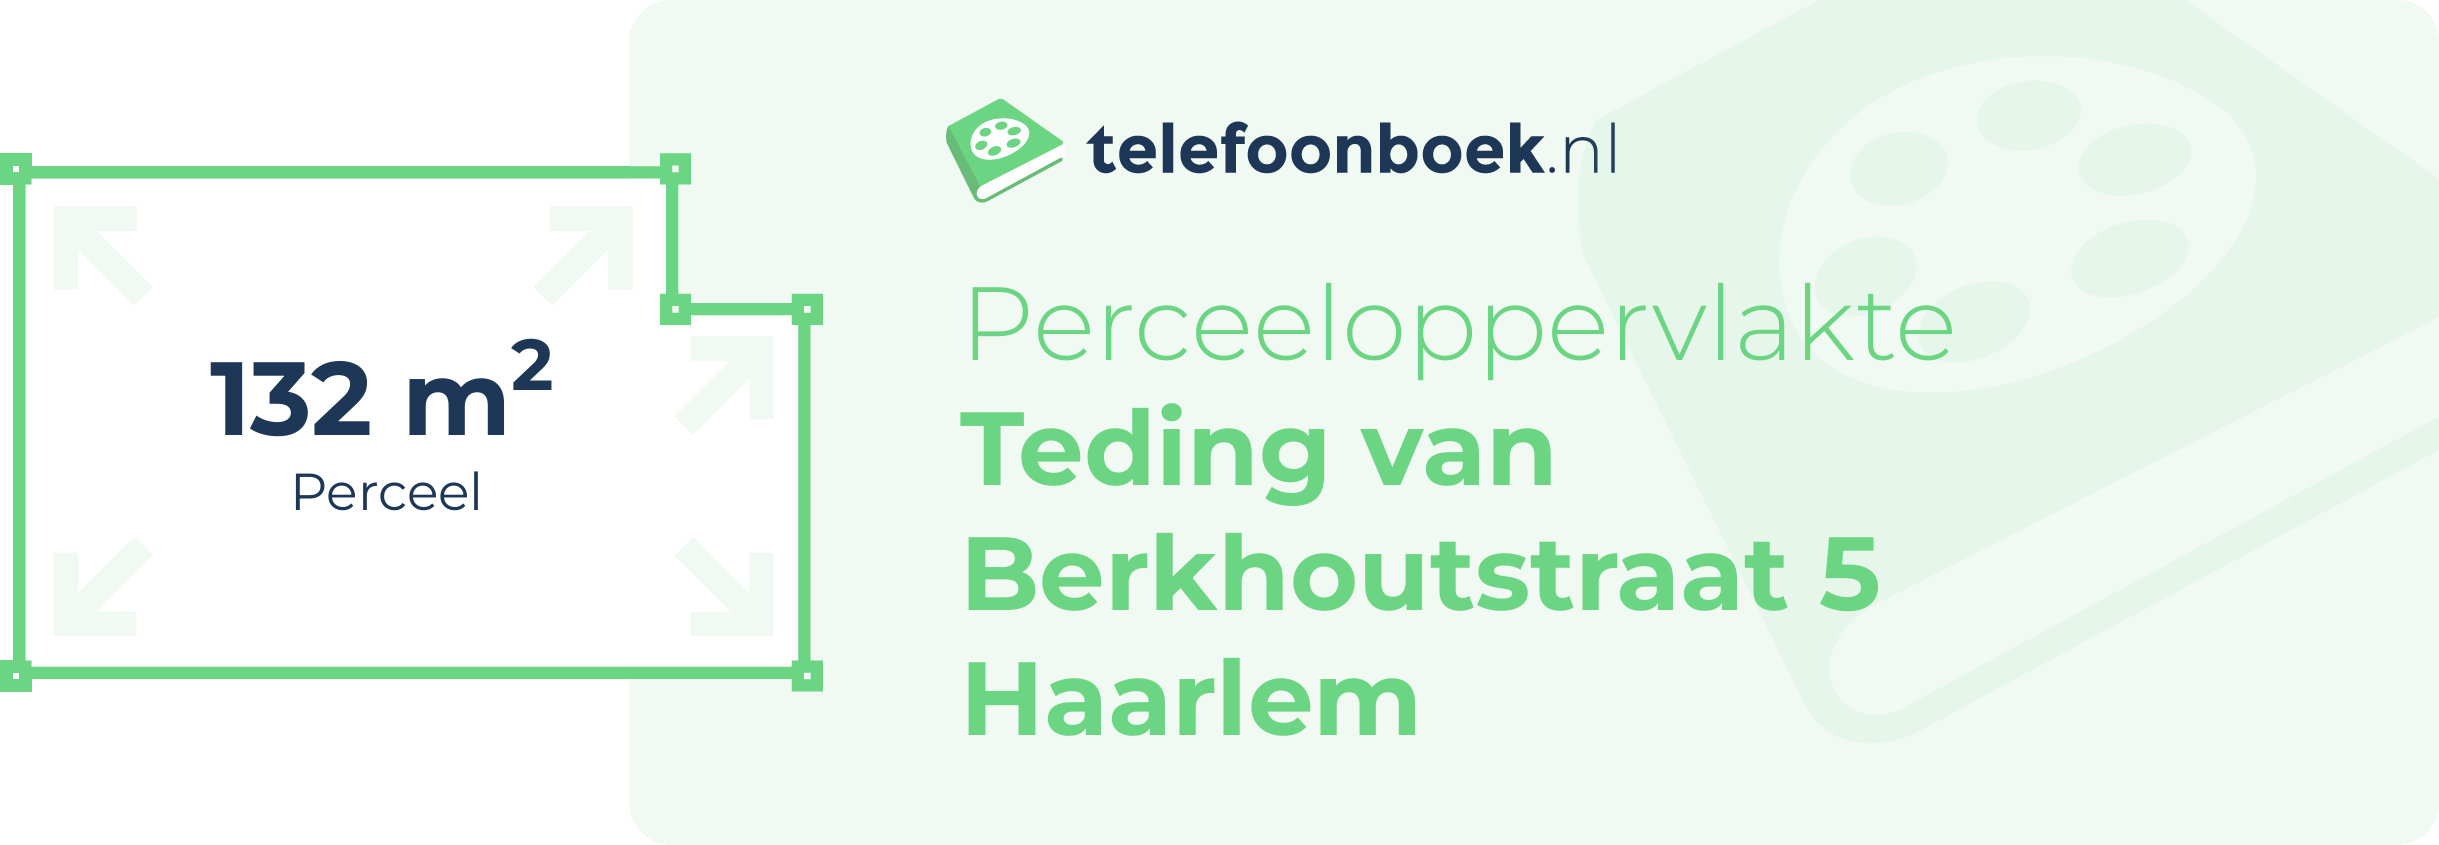 Perceeloppervlakte Teding Van Berkhoutstraat 5 Haarlem